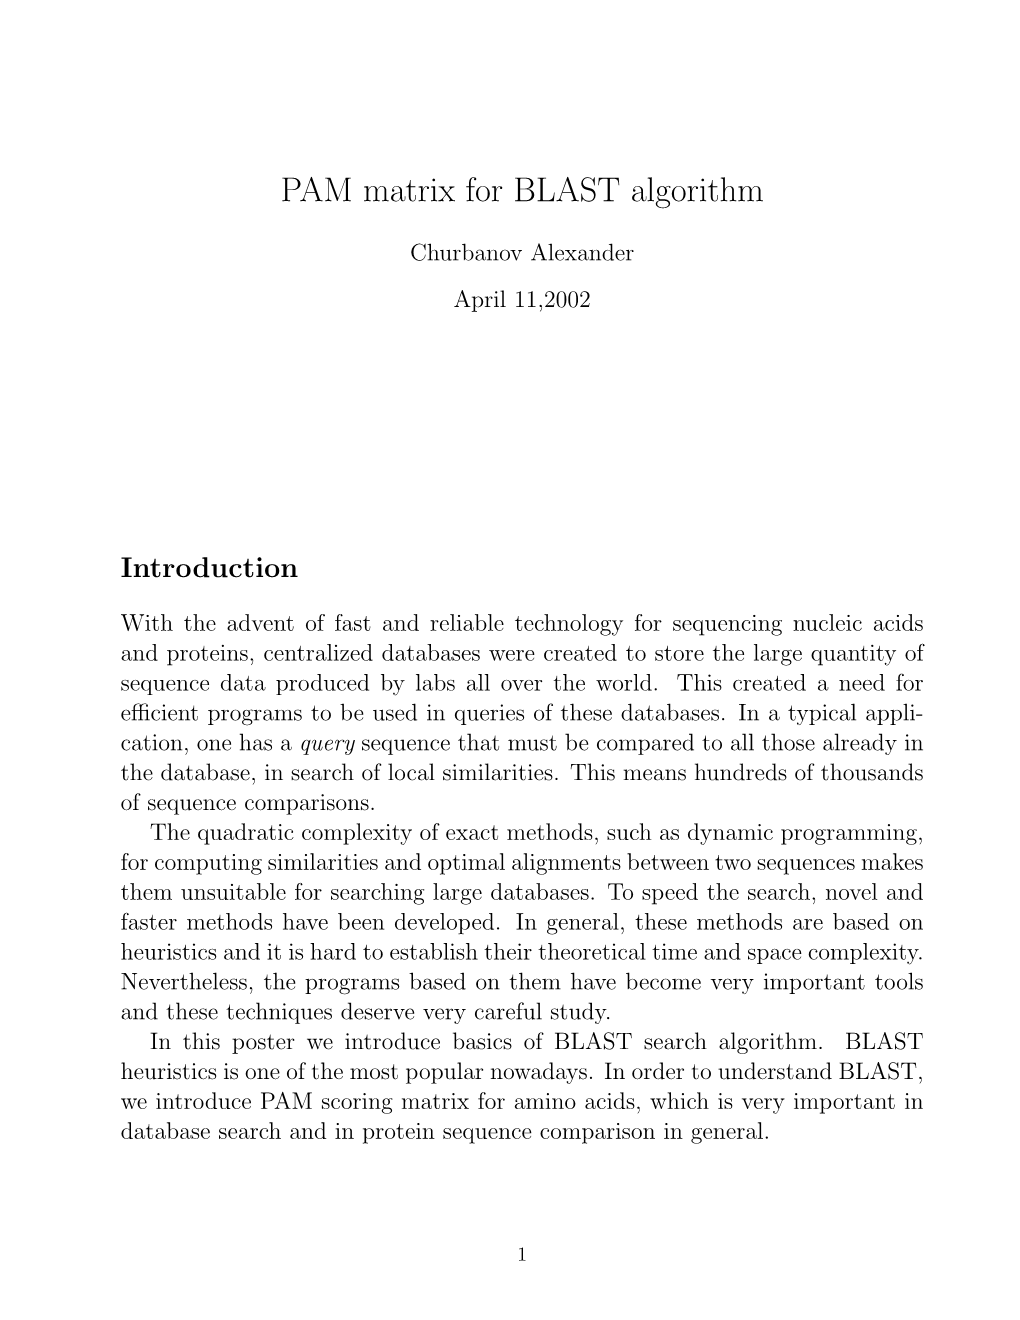 PAM Matrix for BLAST Algorithm